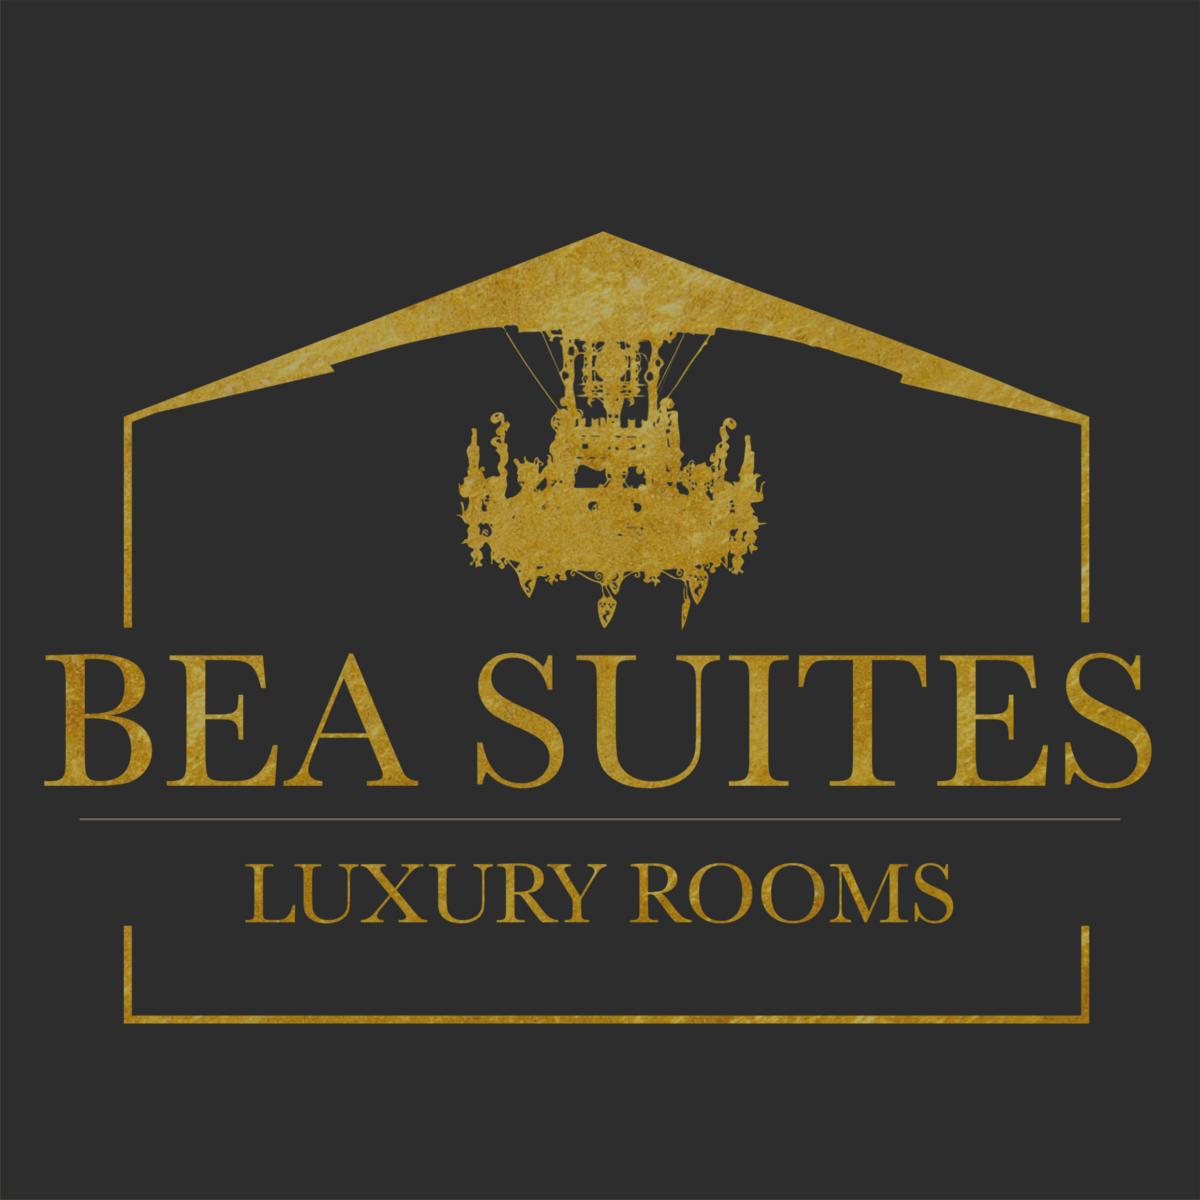 Bea Suites Luxury Rooms